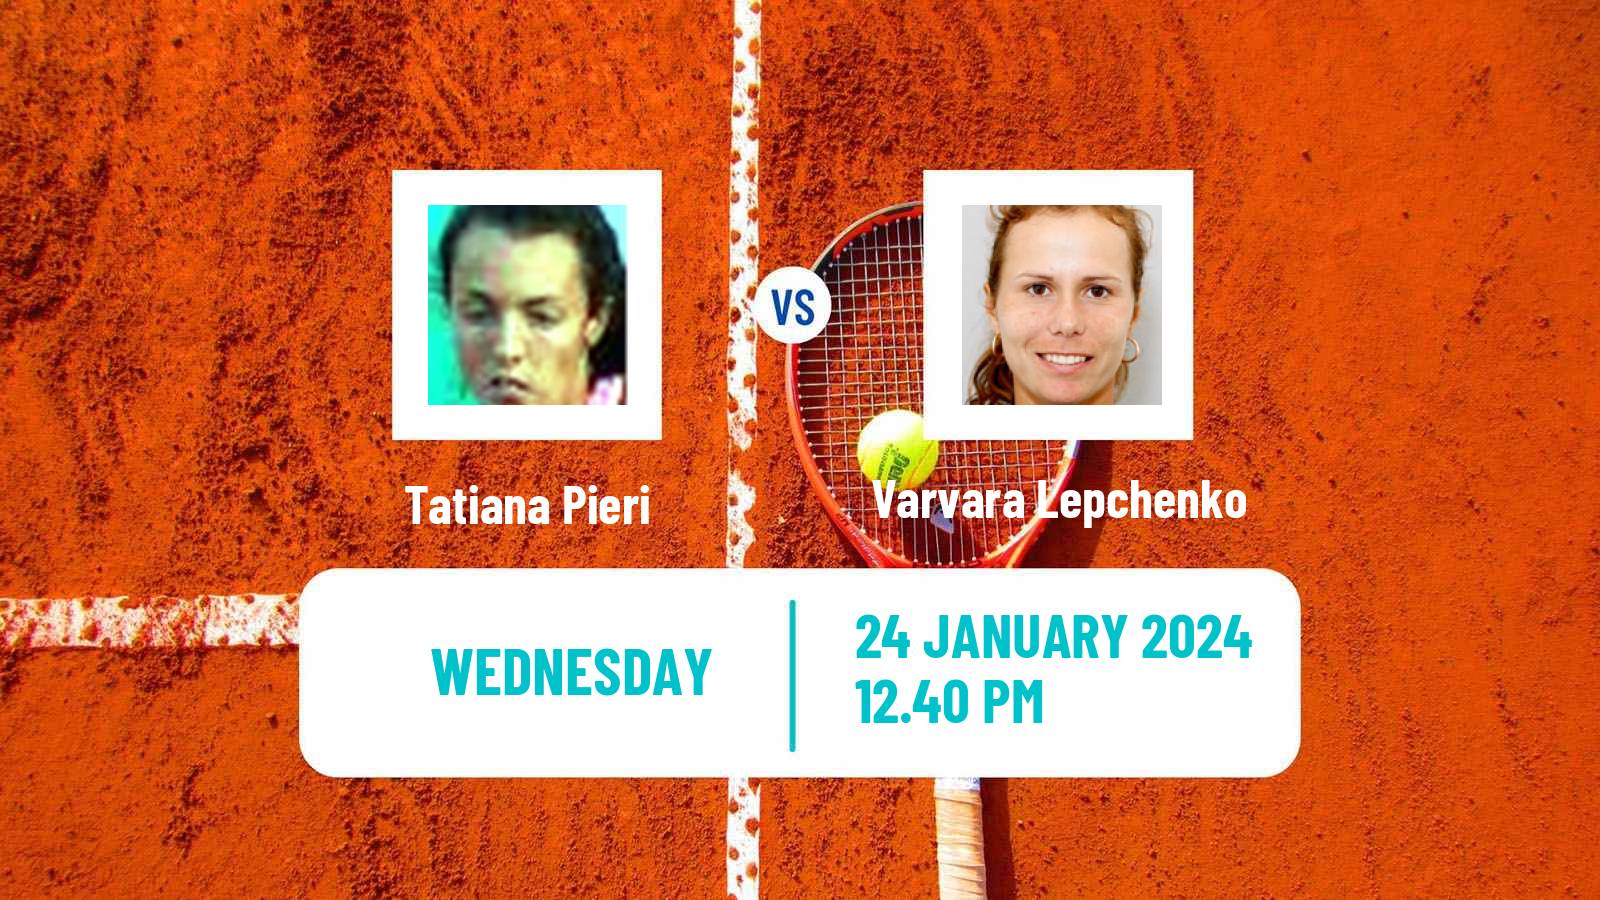 Tennis ITF W75 H Vero Beach Fl Women Tatiana Pieri - Varvara Lepchenko